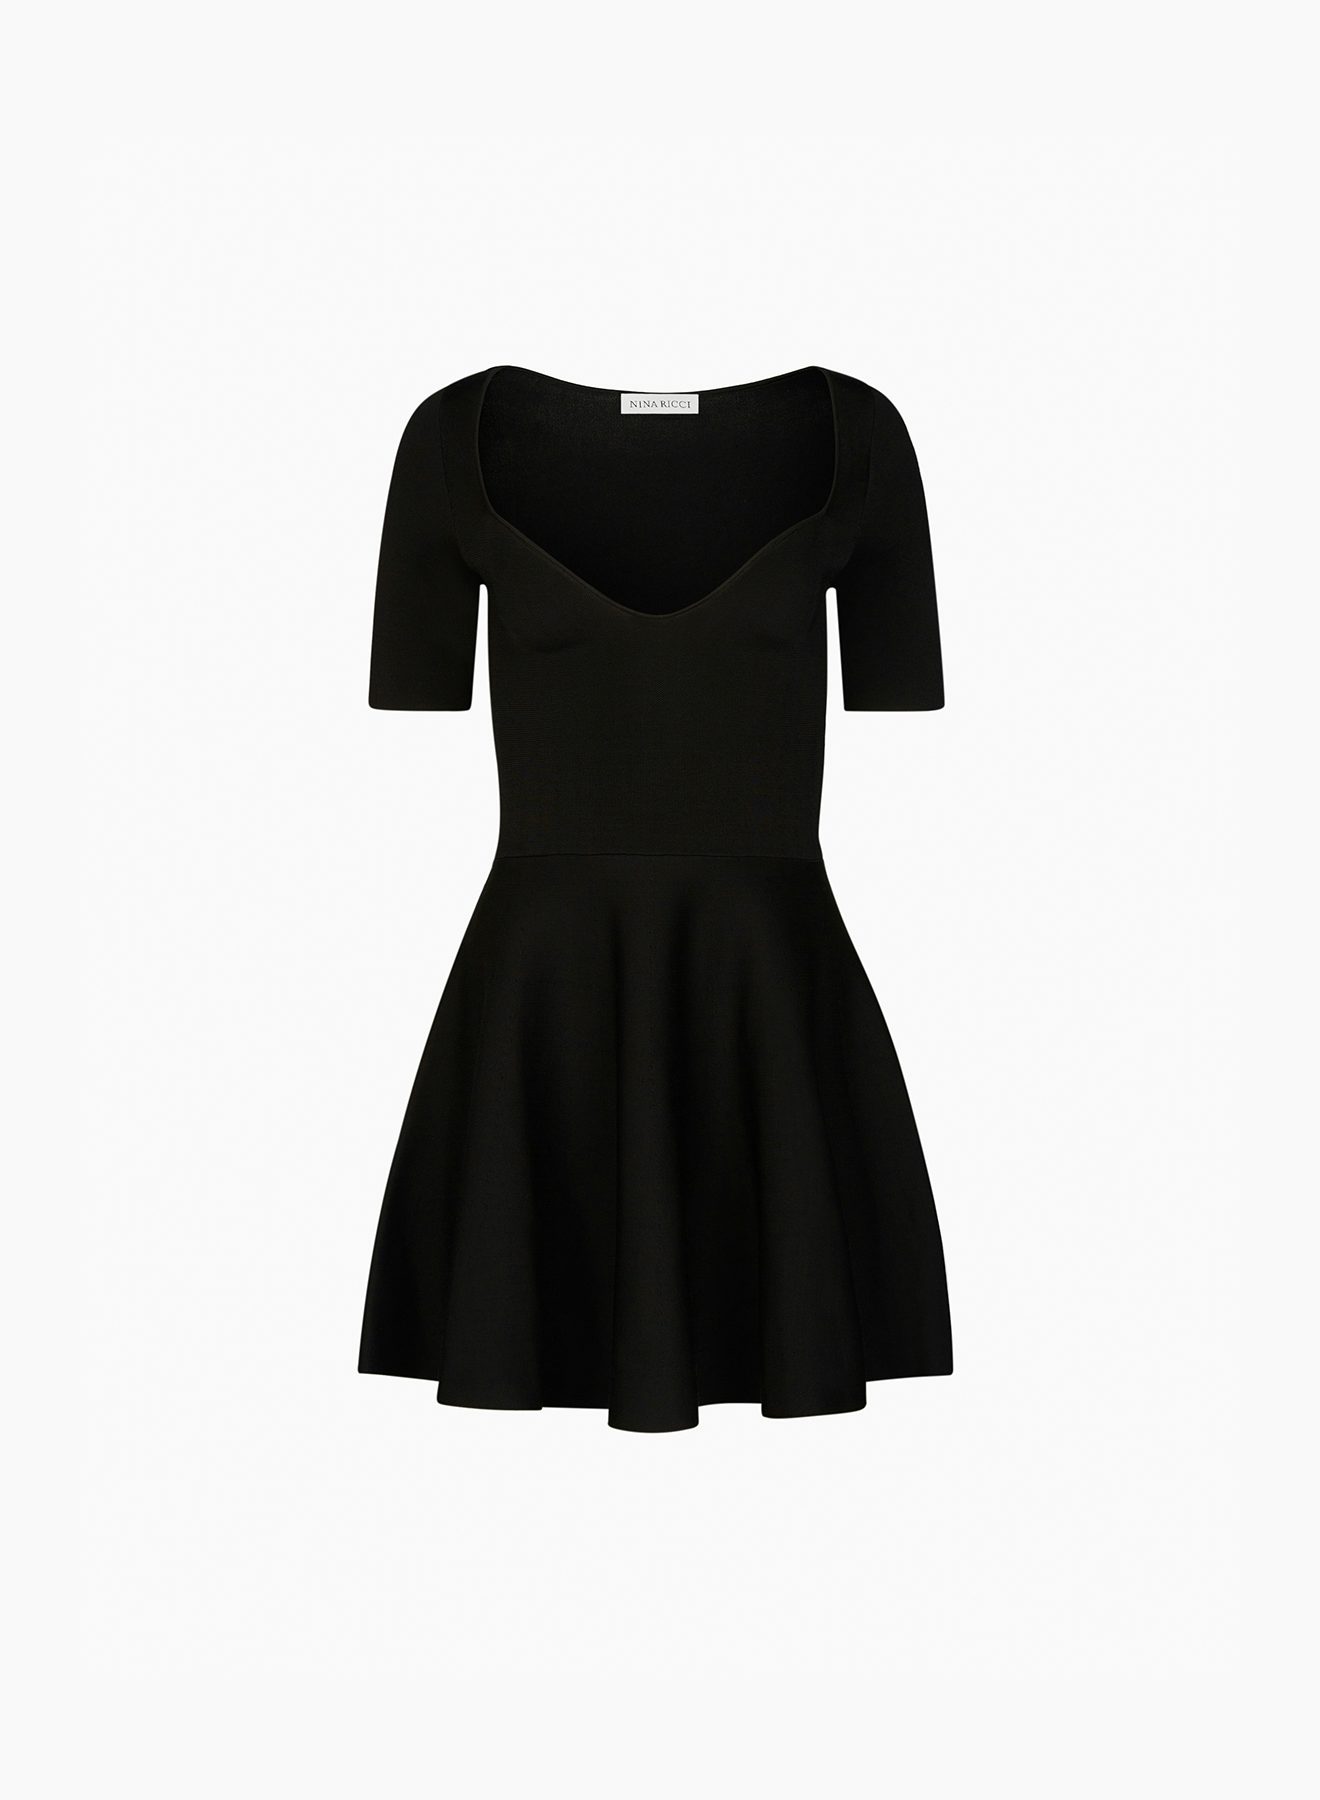 Heart neckline flared dress in black - Nina Ricci